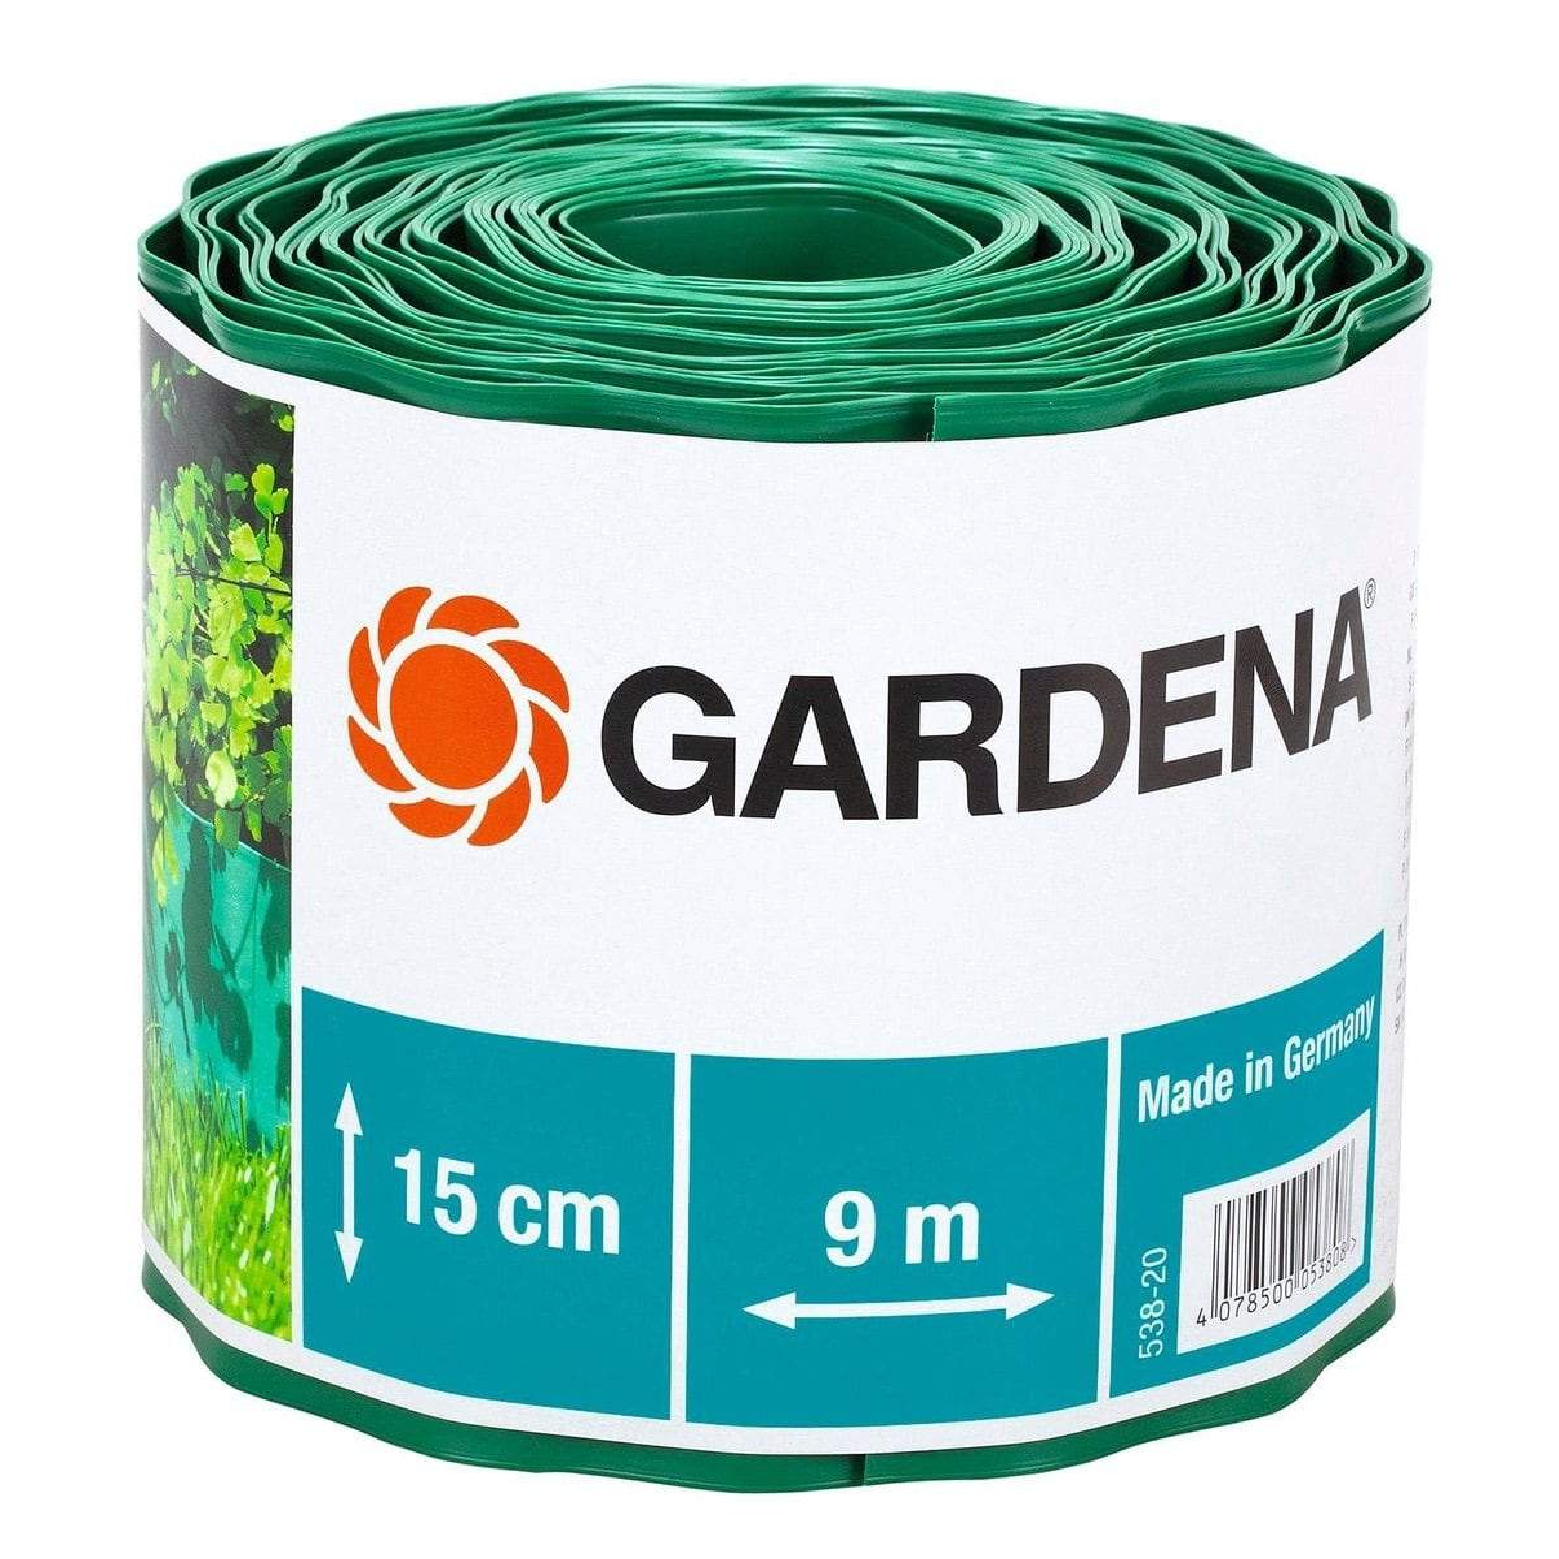 GARDENA G-538 Lawn Edging 15CM X 9M GREEN